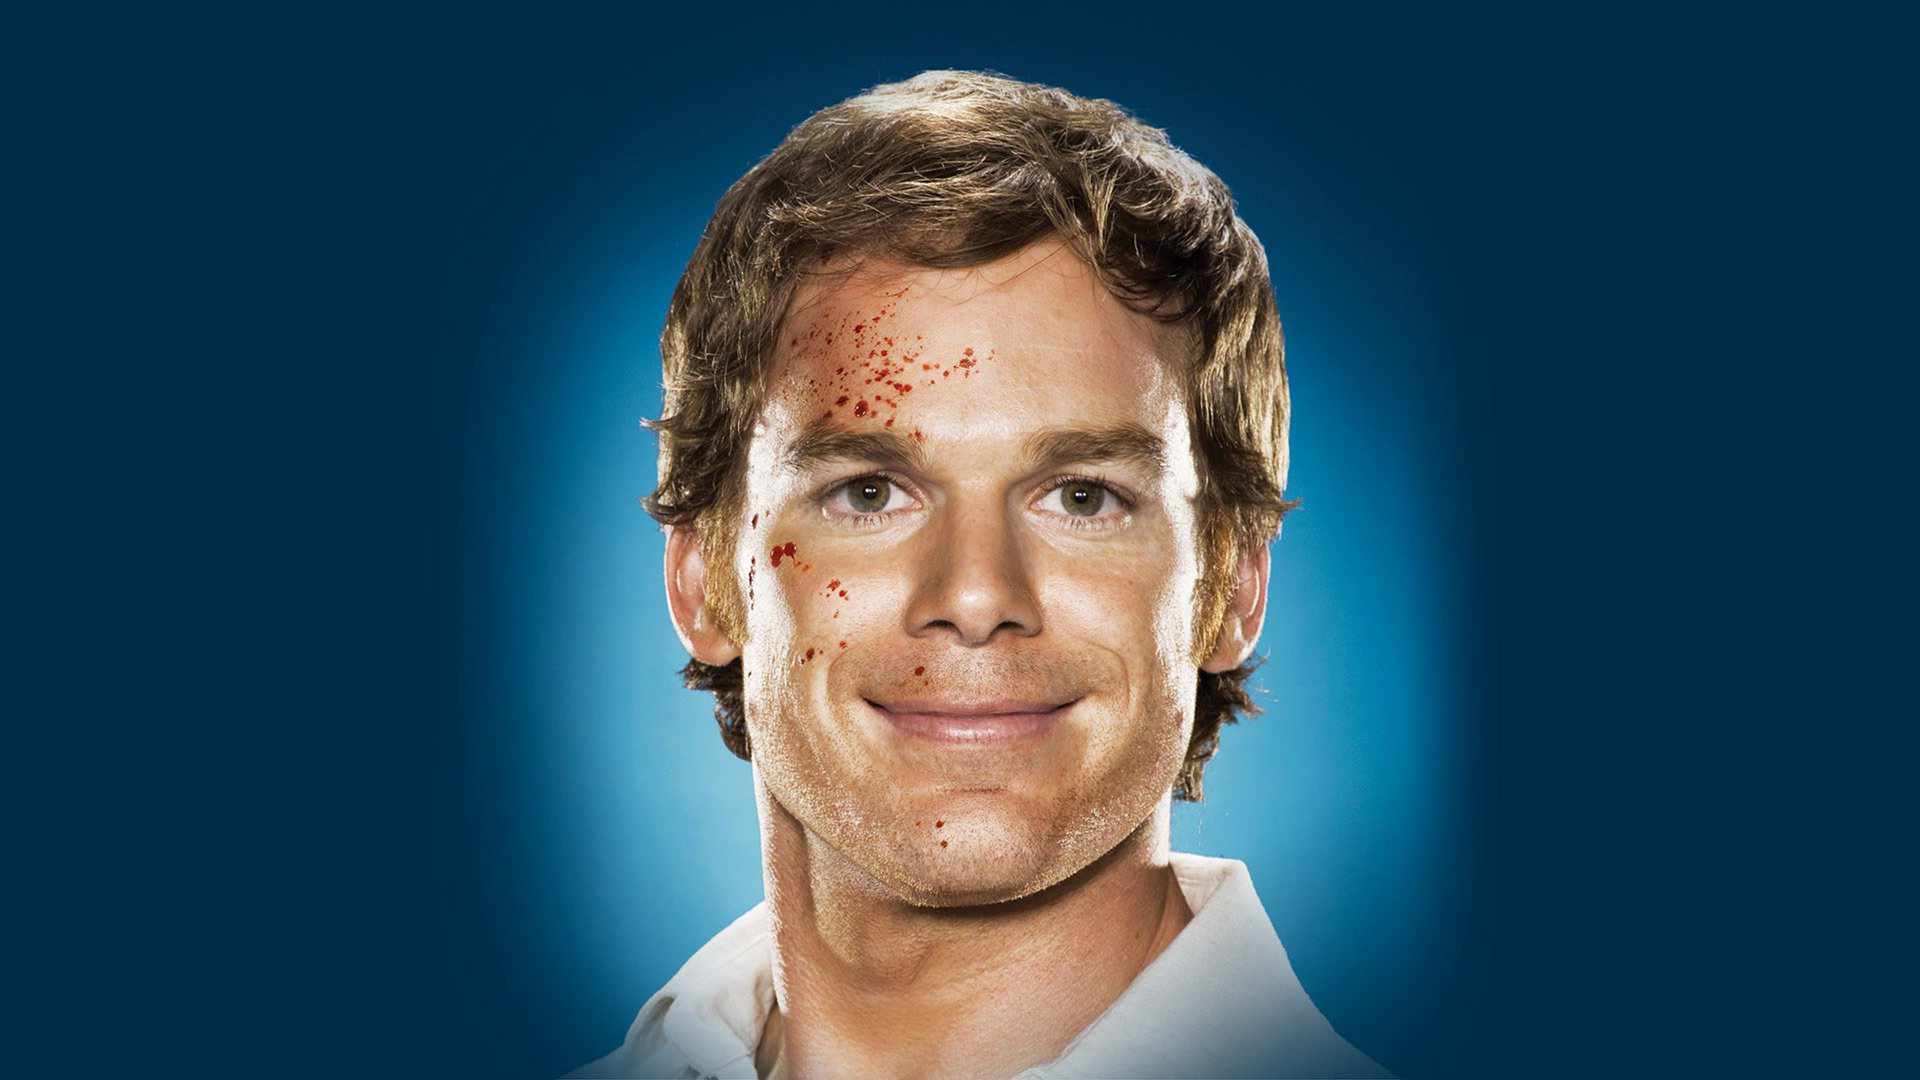 Dexter (Season 2) / Dexter (Season 2) (2007)